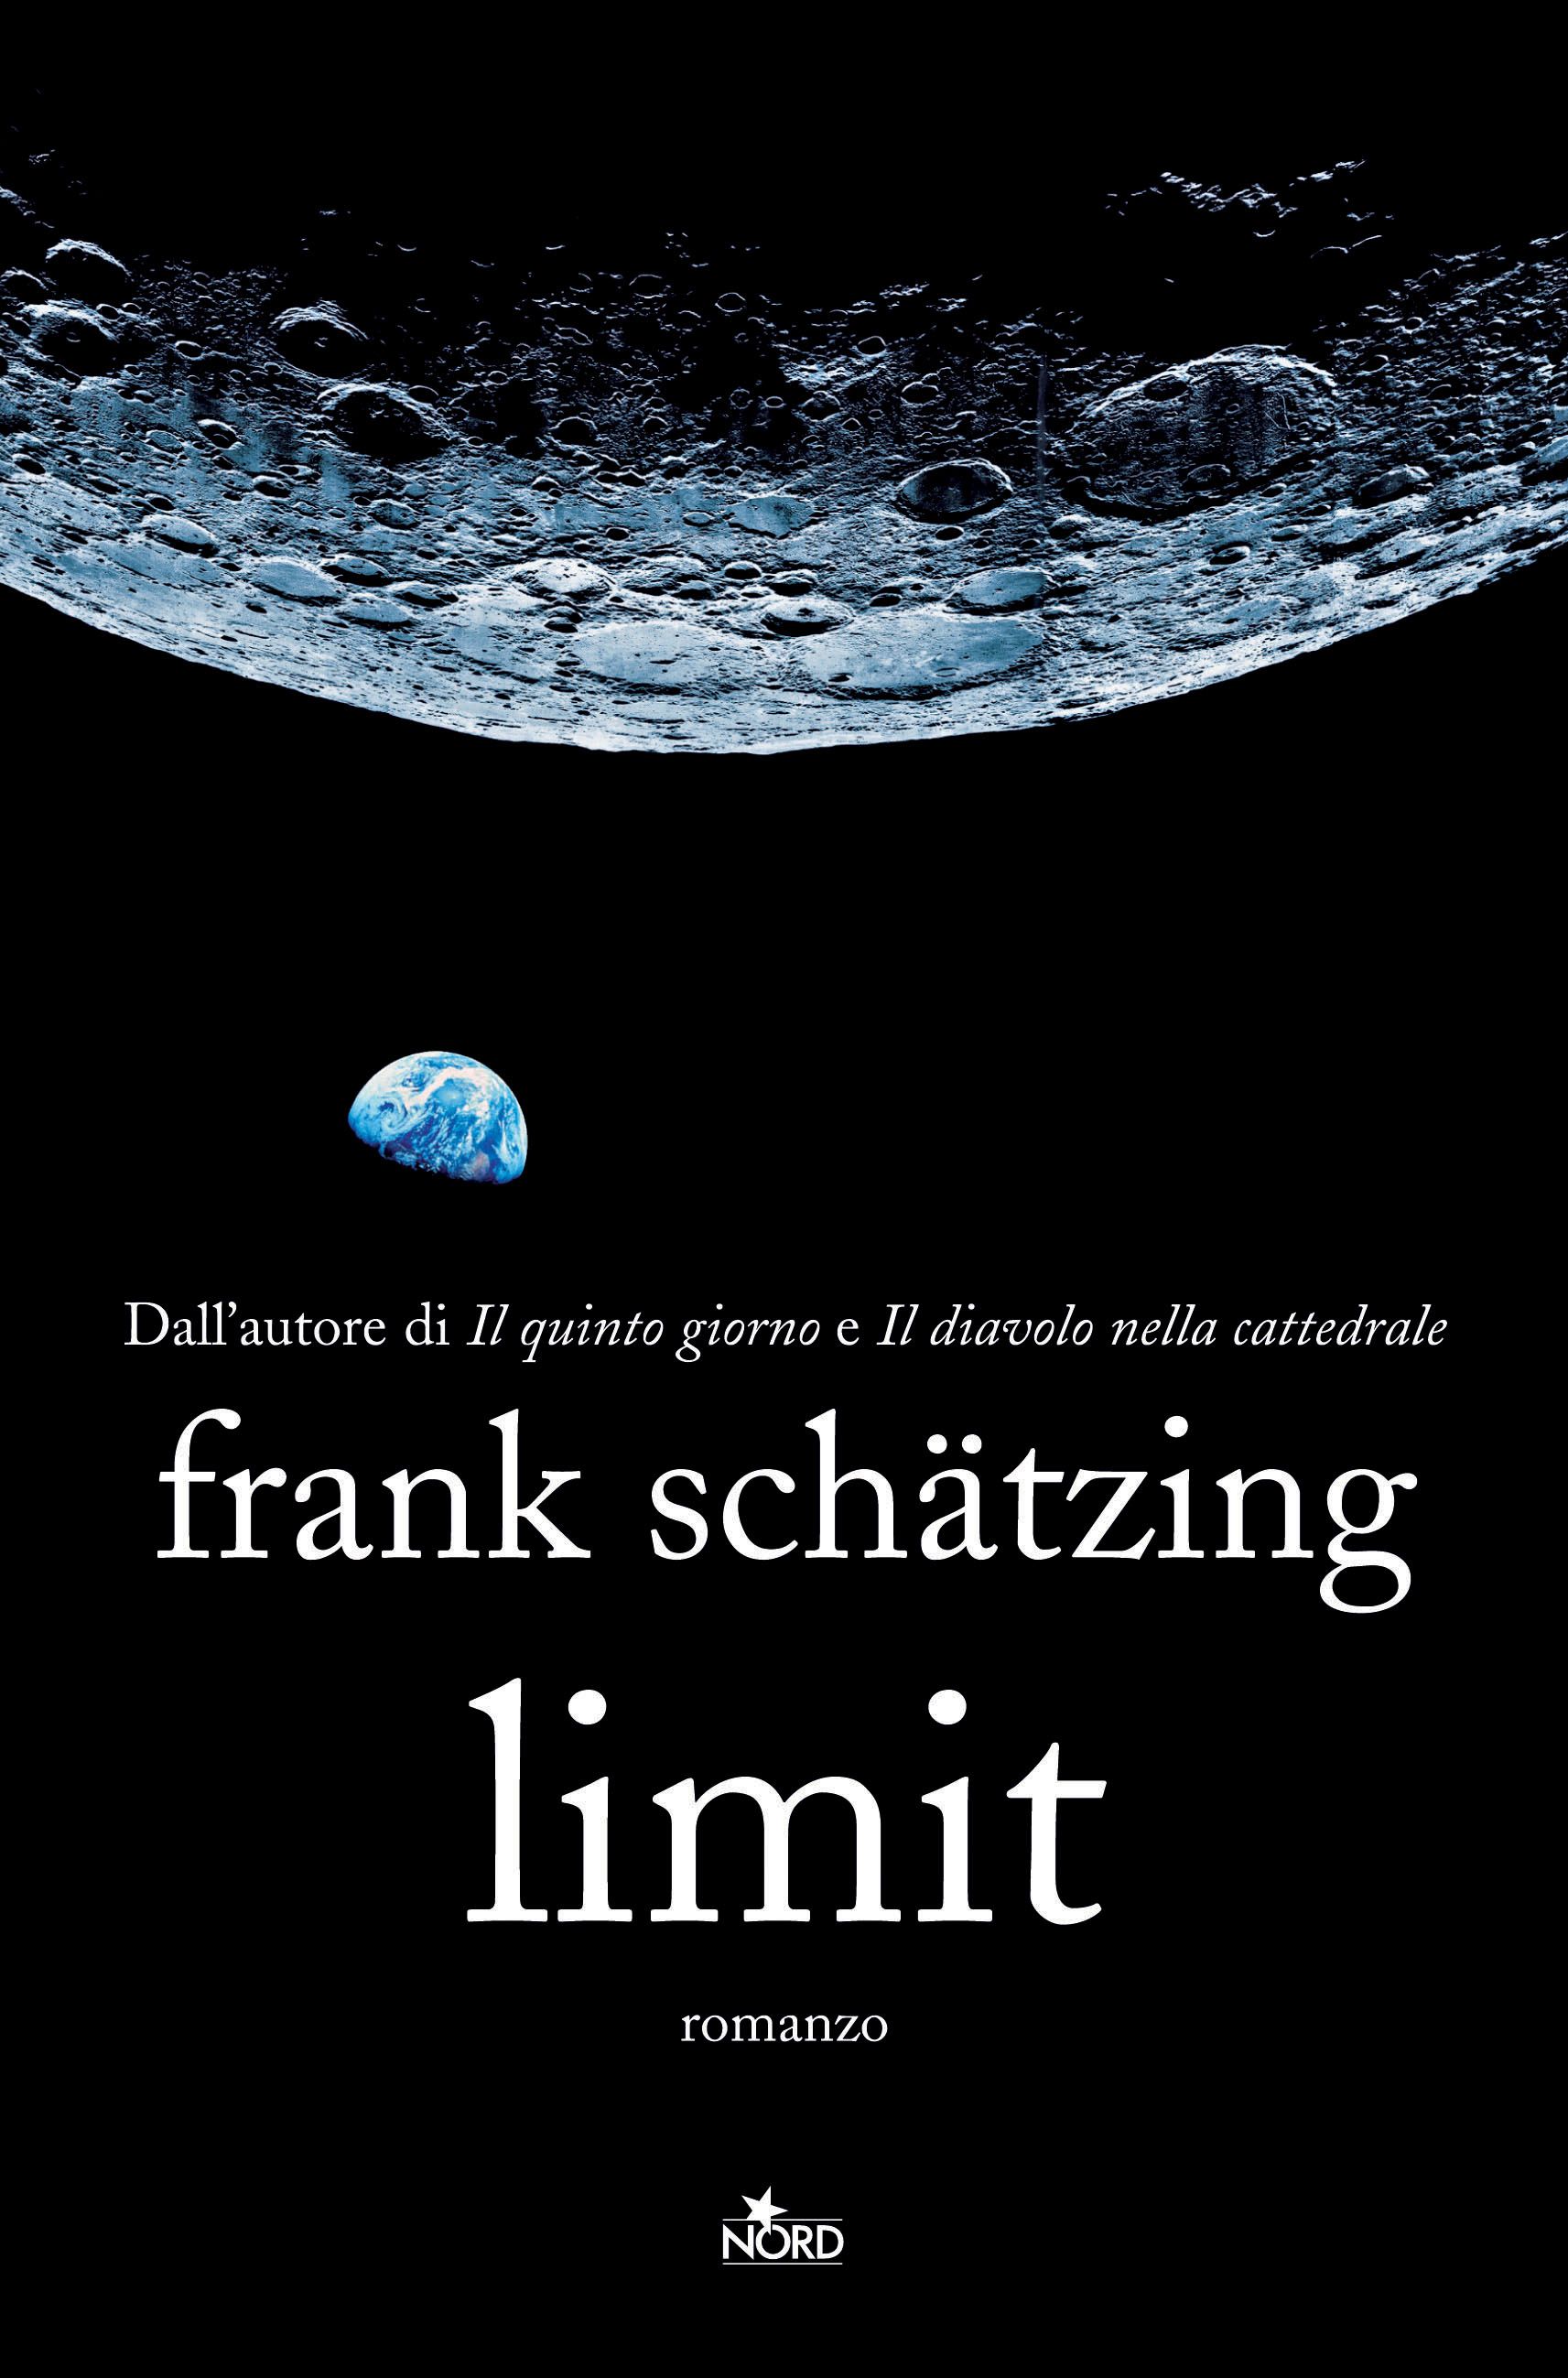 Frank Schätzing: Limit (Paperback, Italiano language, 2013, TEA)